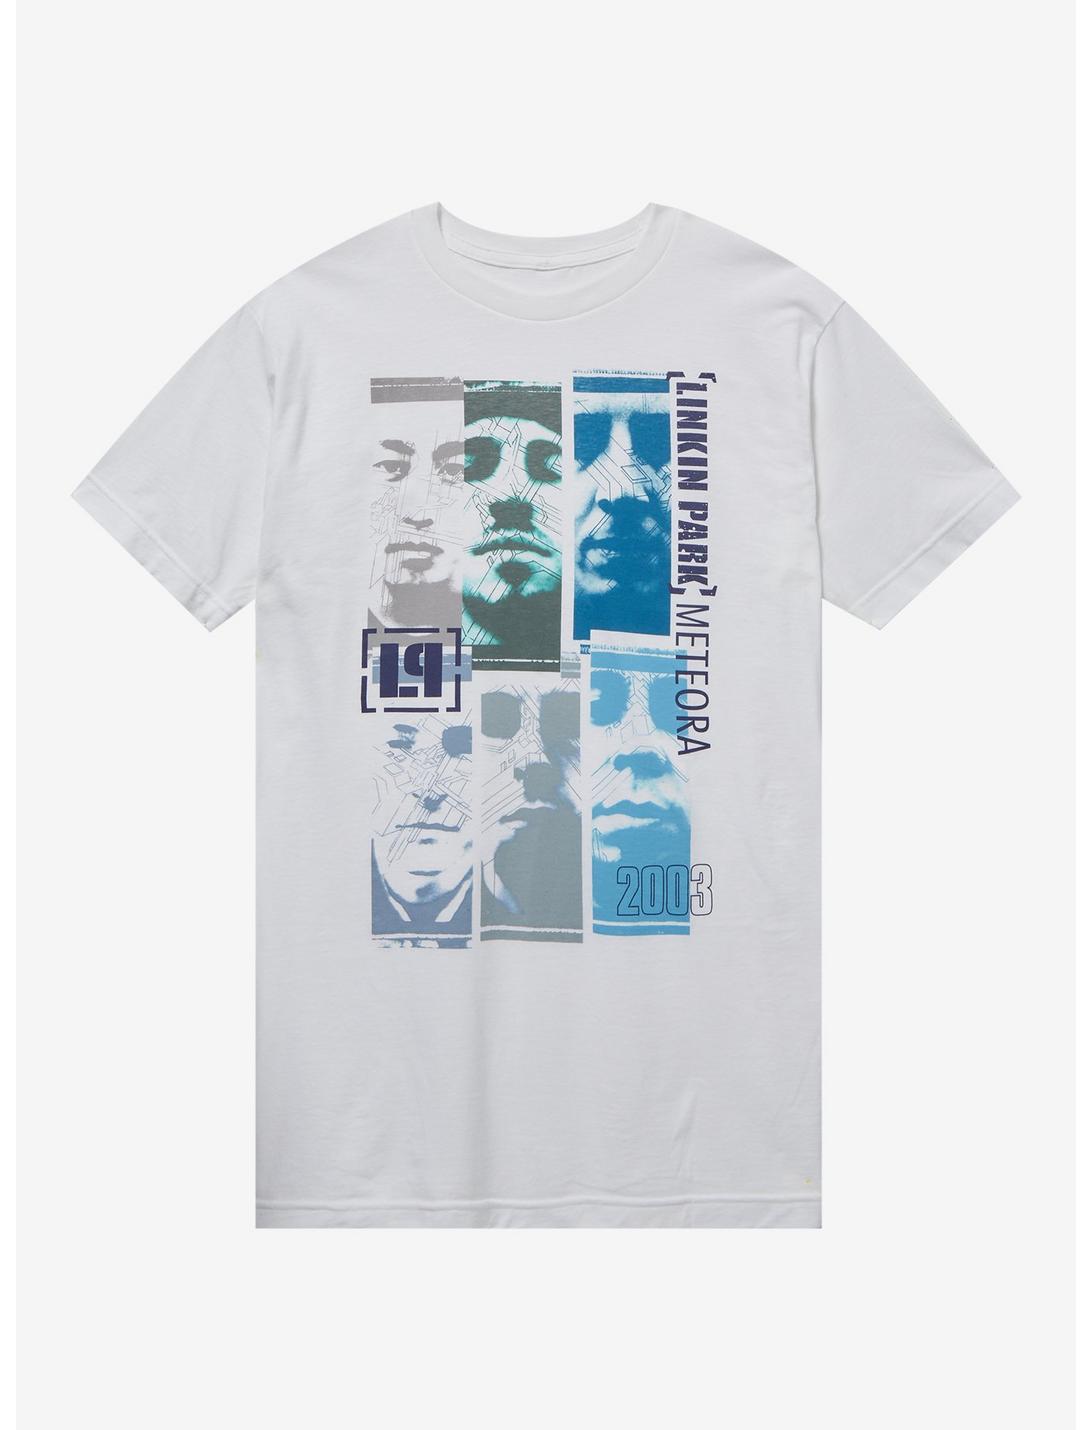 Linkin Park Meteora Collage T-Shirt, BRIGHT WHITE, hi-res